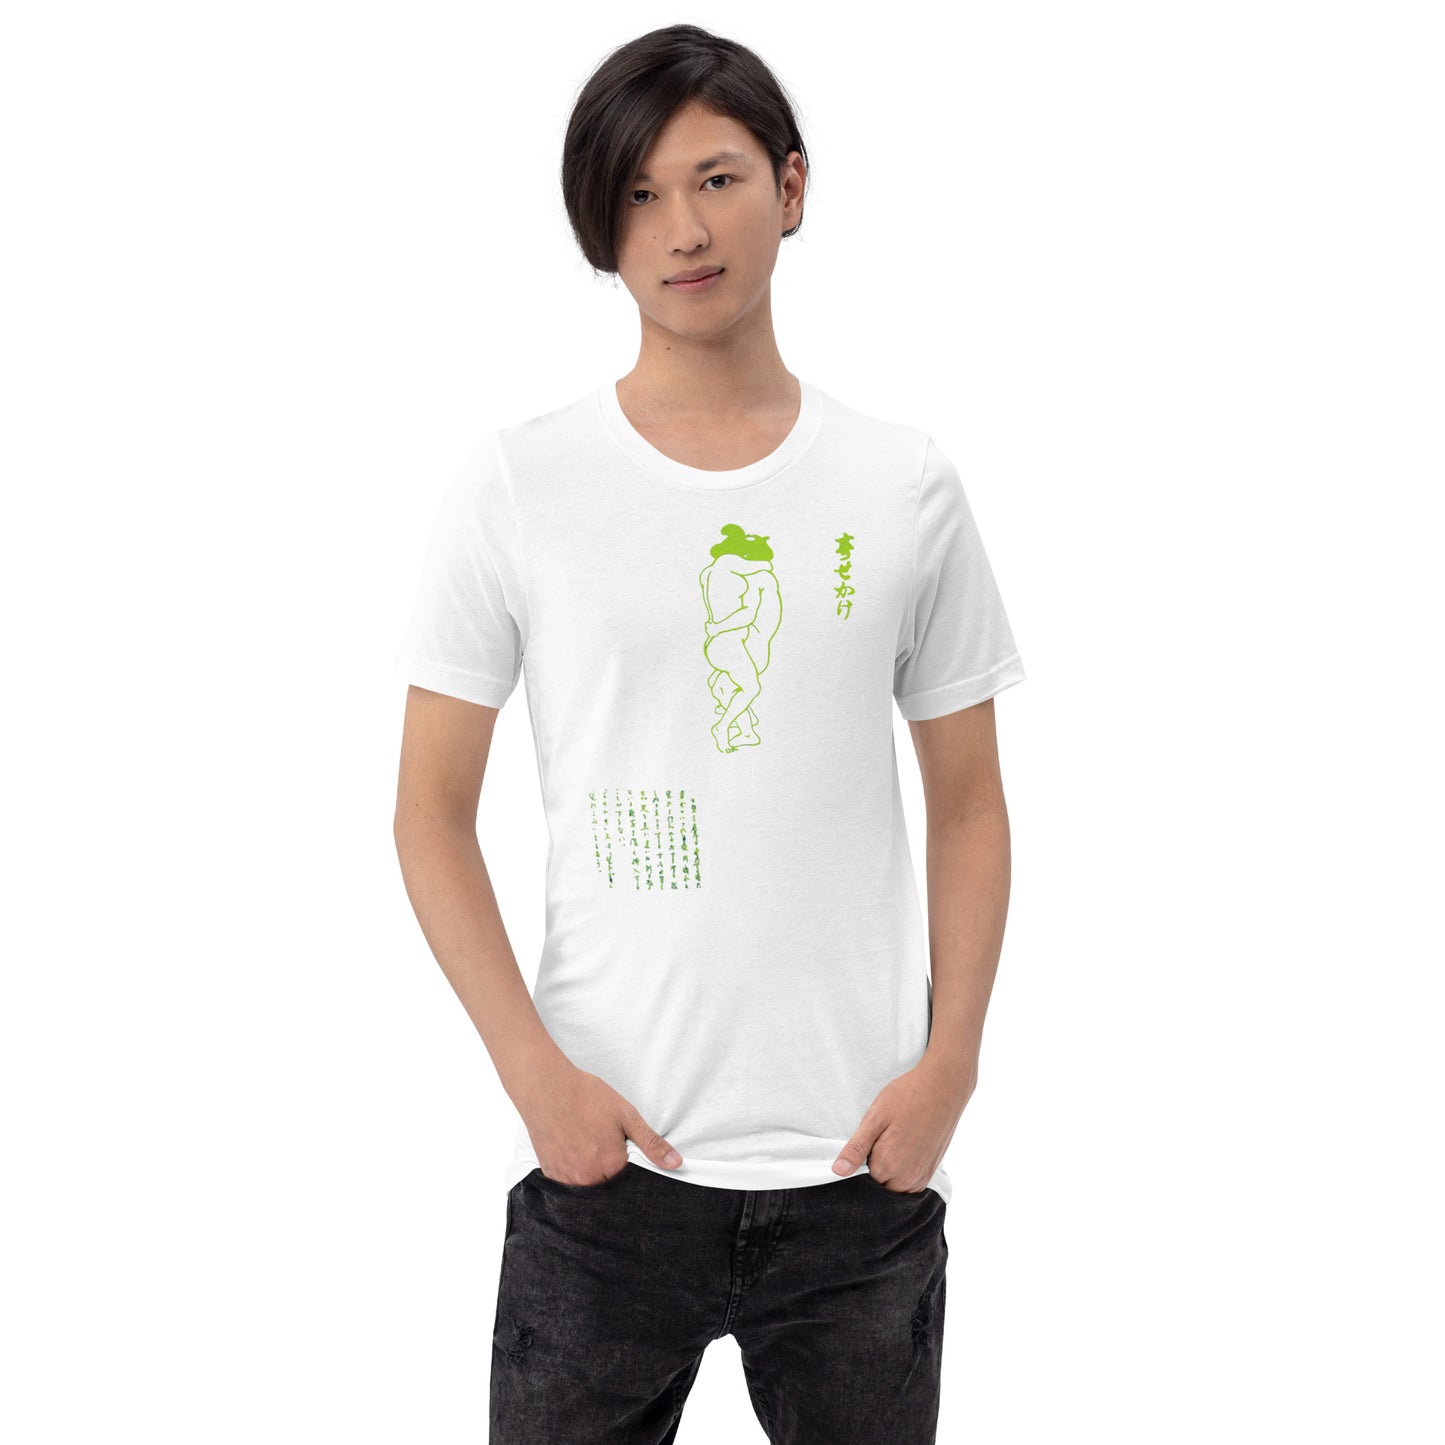 Unisex t-shirt "42 YOSEKAKE" White